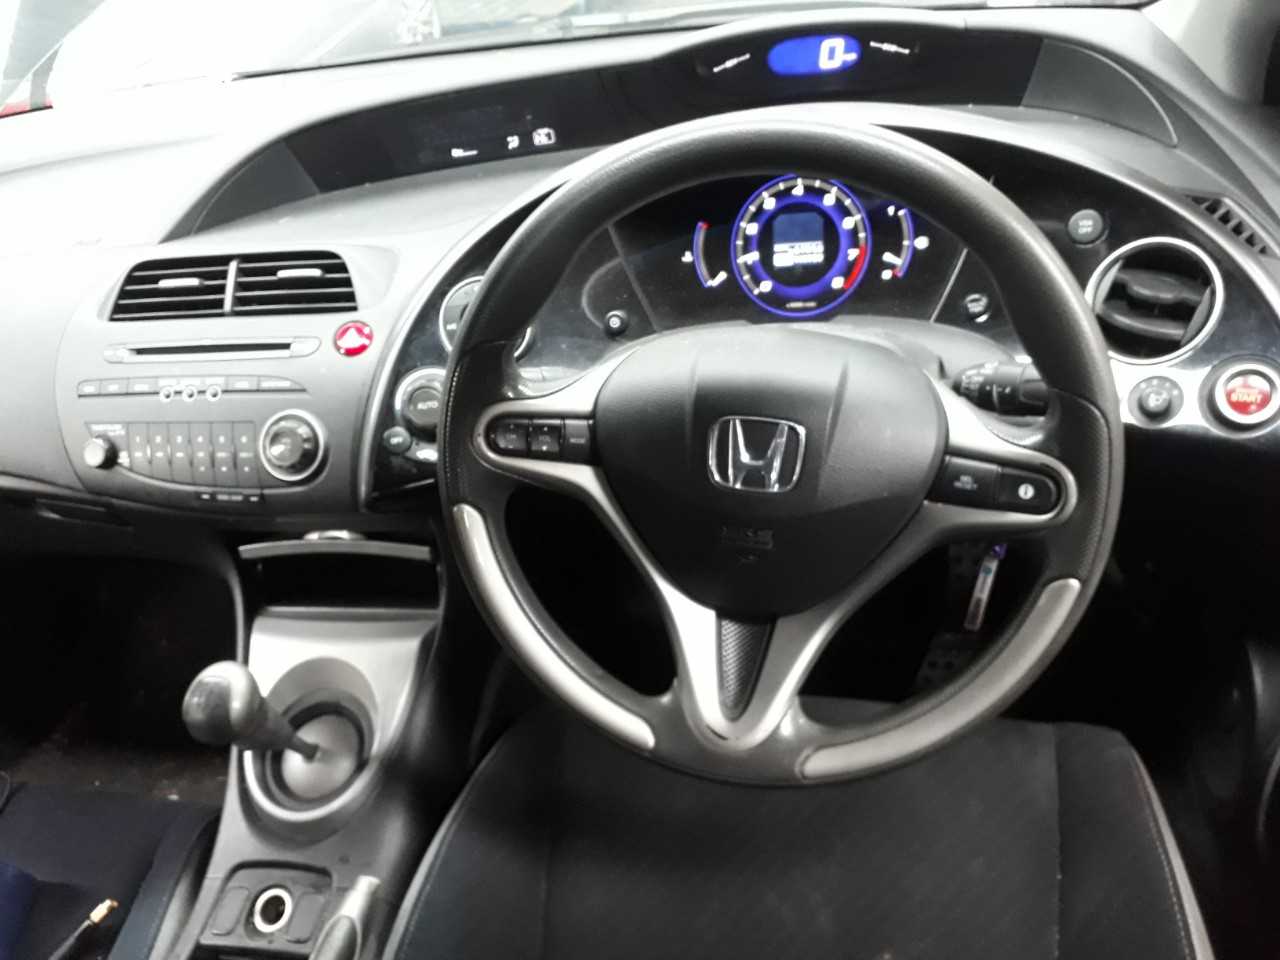 Honda civic viii (2006-2011) - проблемы и неисправности